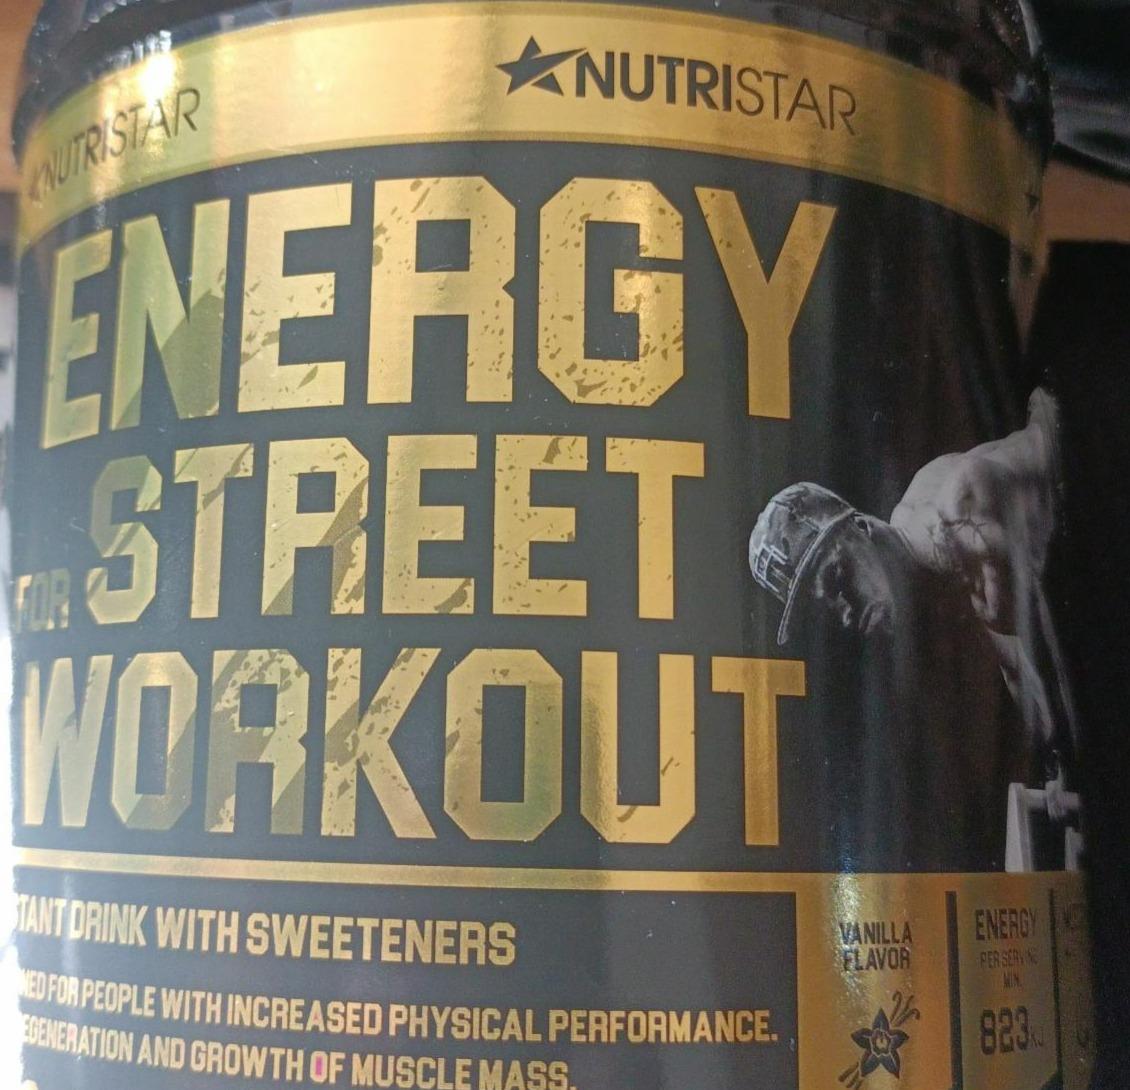 Fotografie - Energy street workout Nutristar